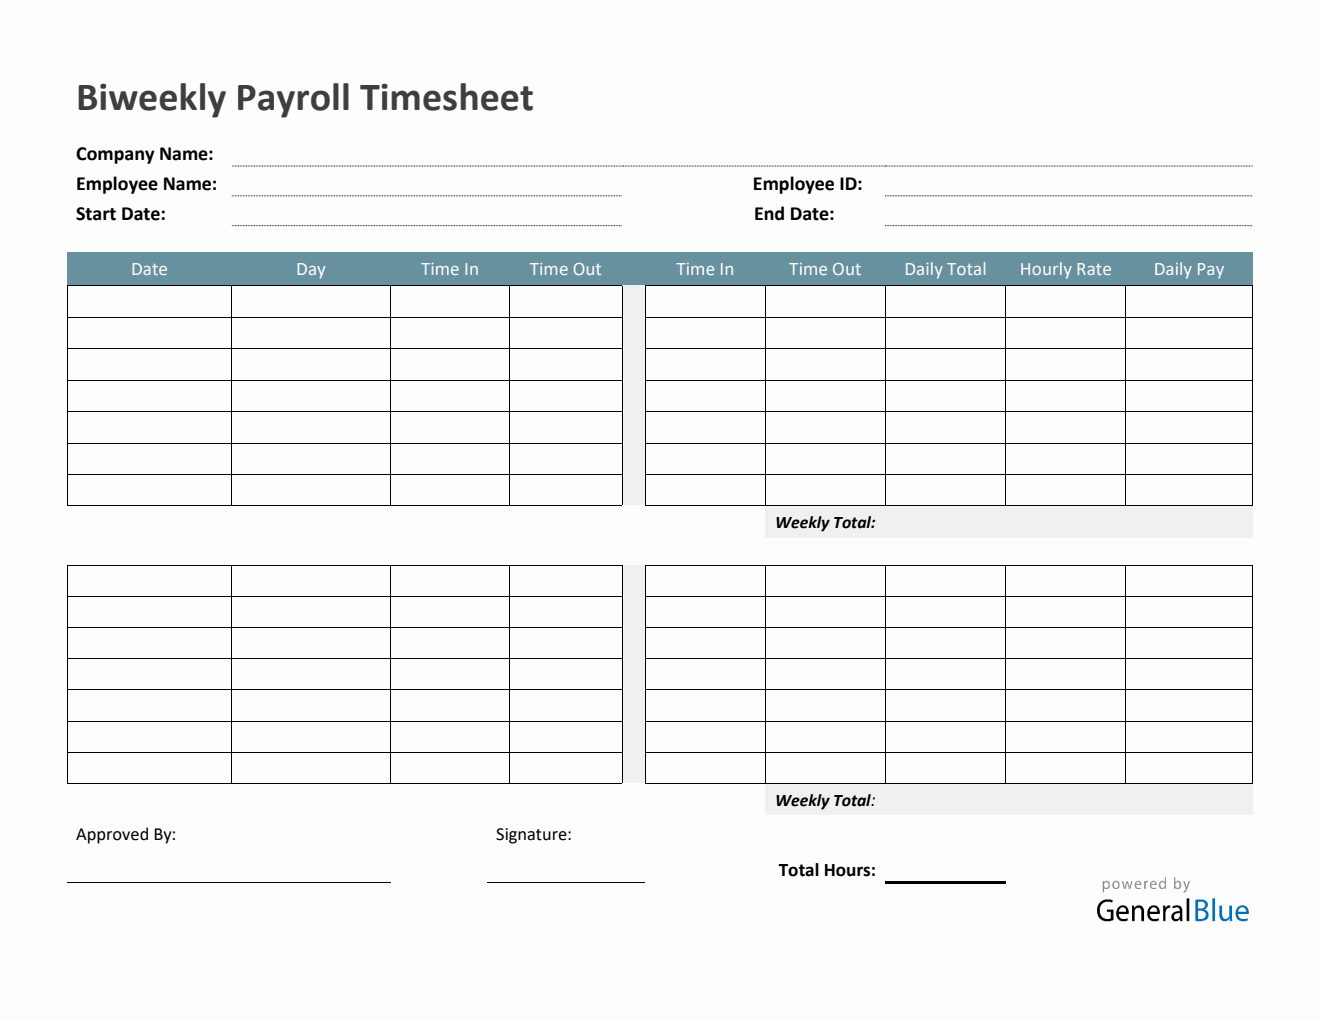 Biweekly Payroll Timesheet in Word